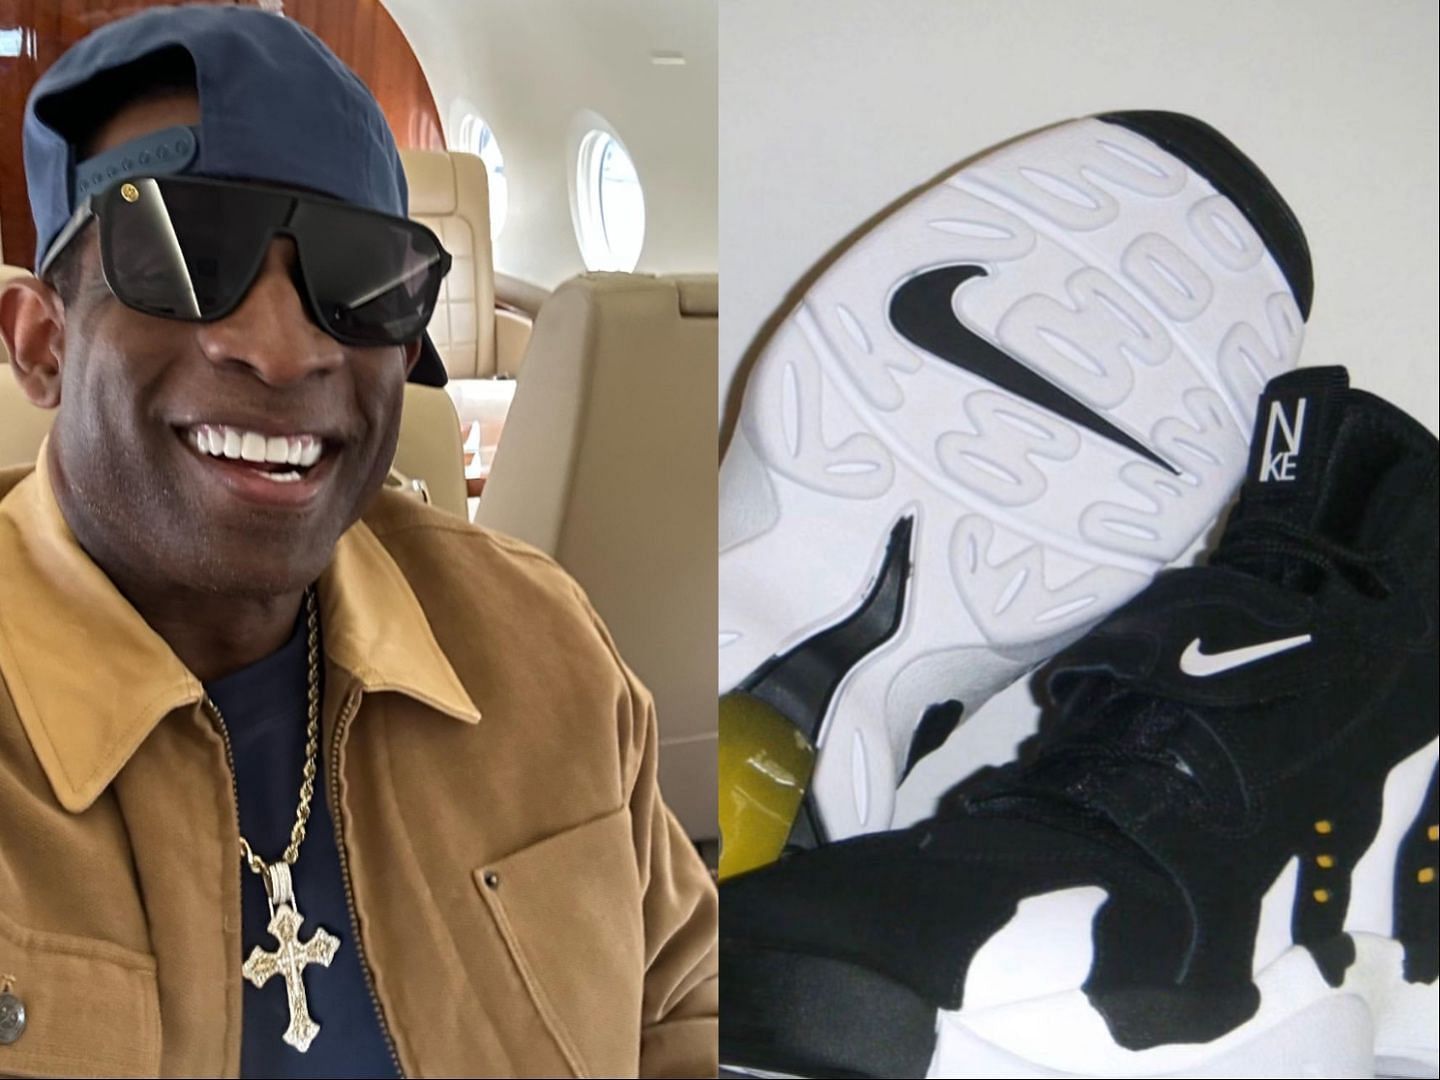 Deion Sanders and Nike shoes, images via Instagram